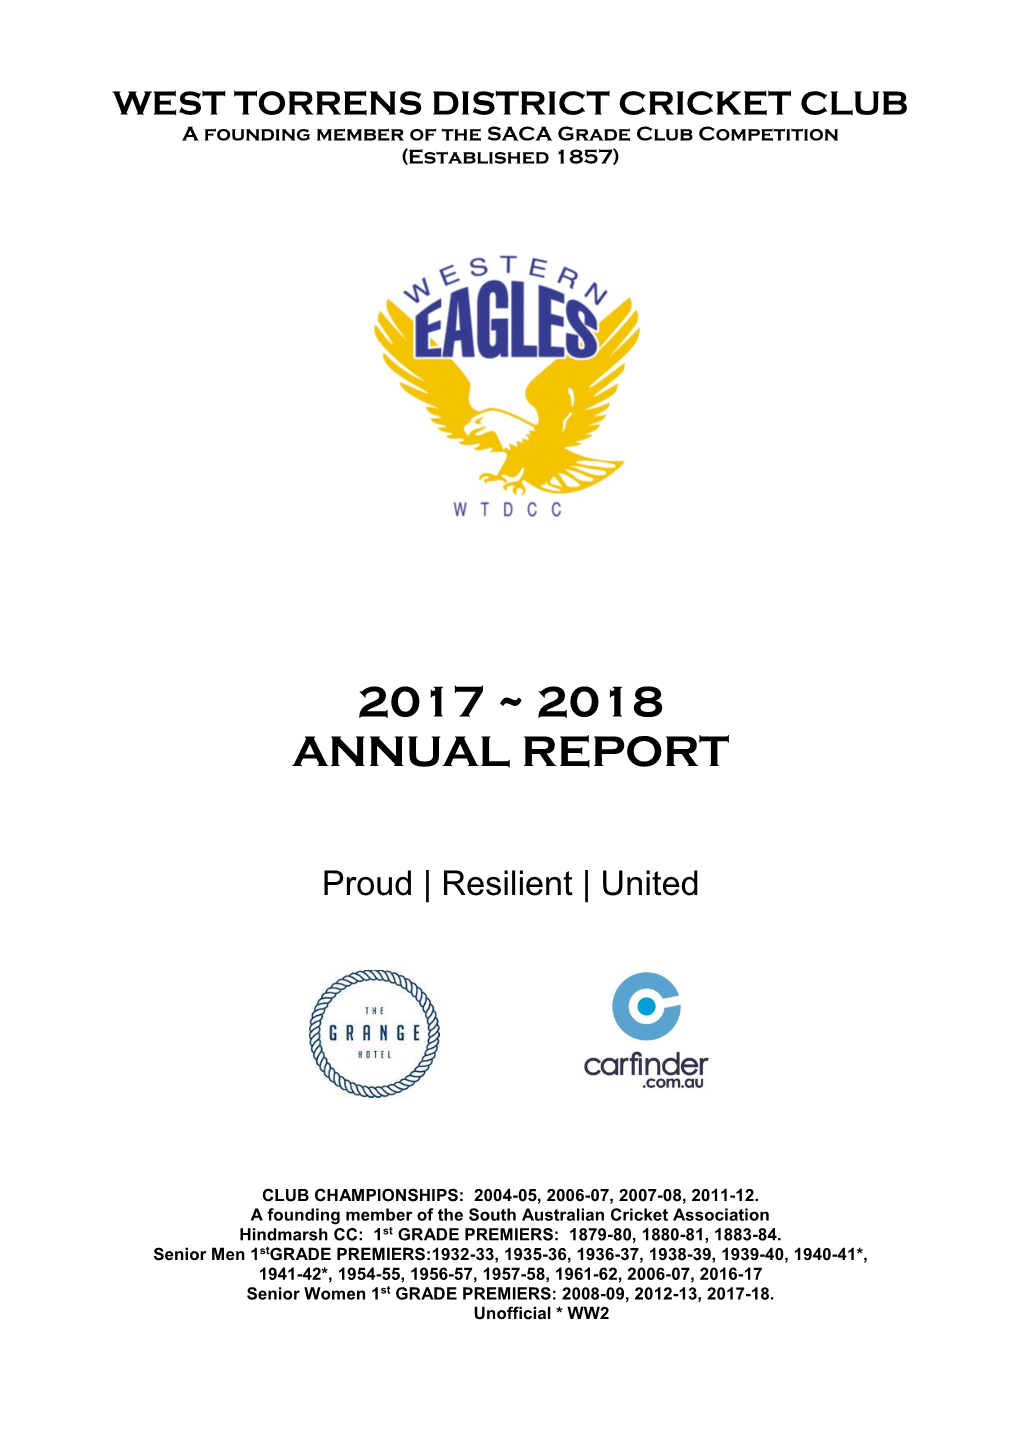 2017 ~ 2018 Annual Report